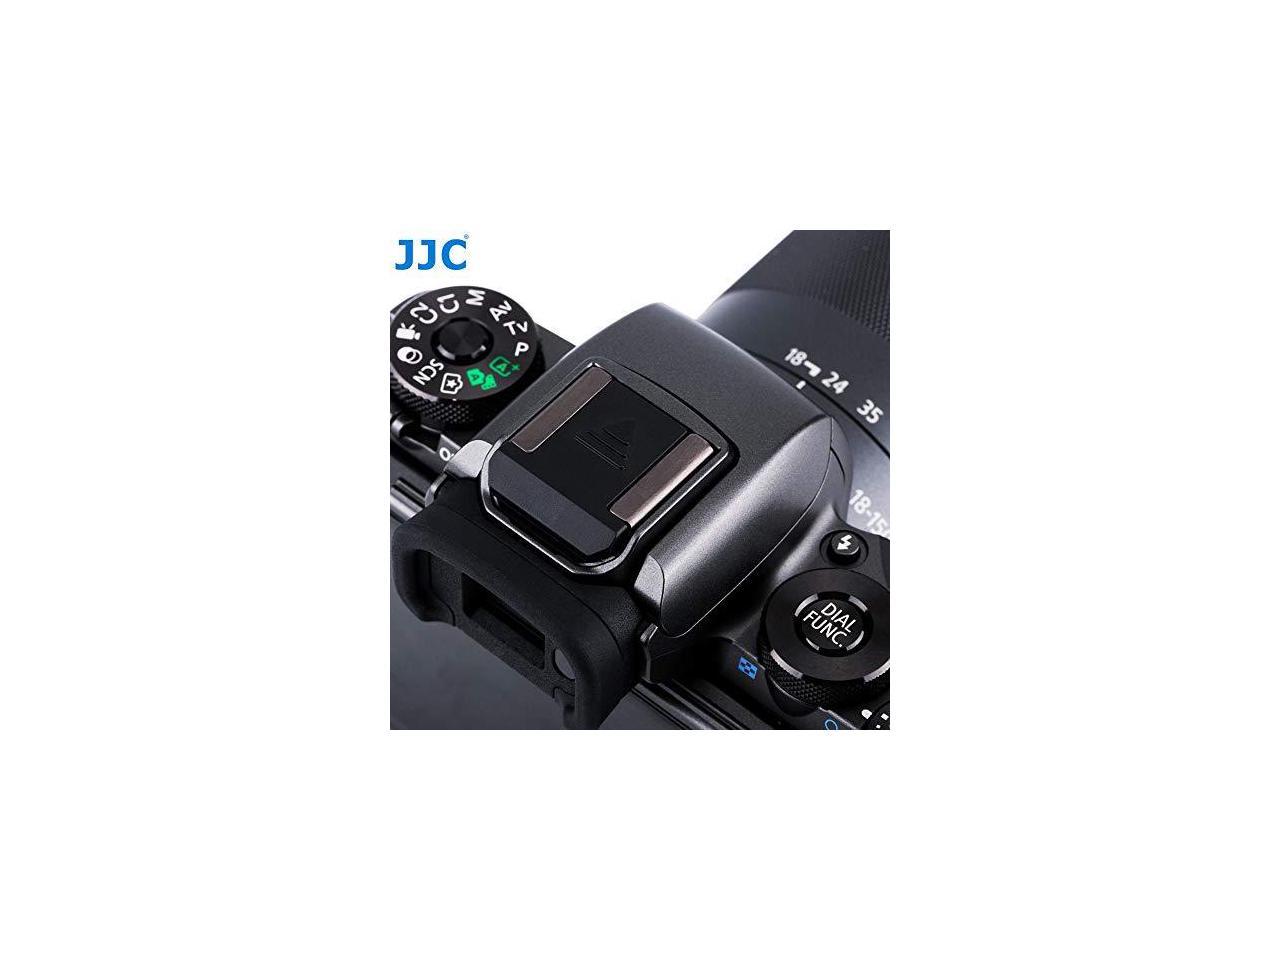 JJC Black Camera Hot Shoe Cover Anti Scratch Protector Cap for Canon EOS R 6D Mark II 6DM2 7D MarkII 5DM3 5DM4 5DsR 77D 80D 70D 60D 800D 760D 750D 700D 100D 200D Rebel T7i T6s T6i T5i T4i SL1 SL2 